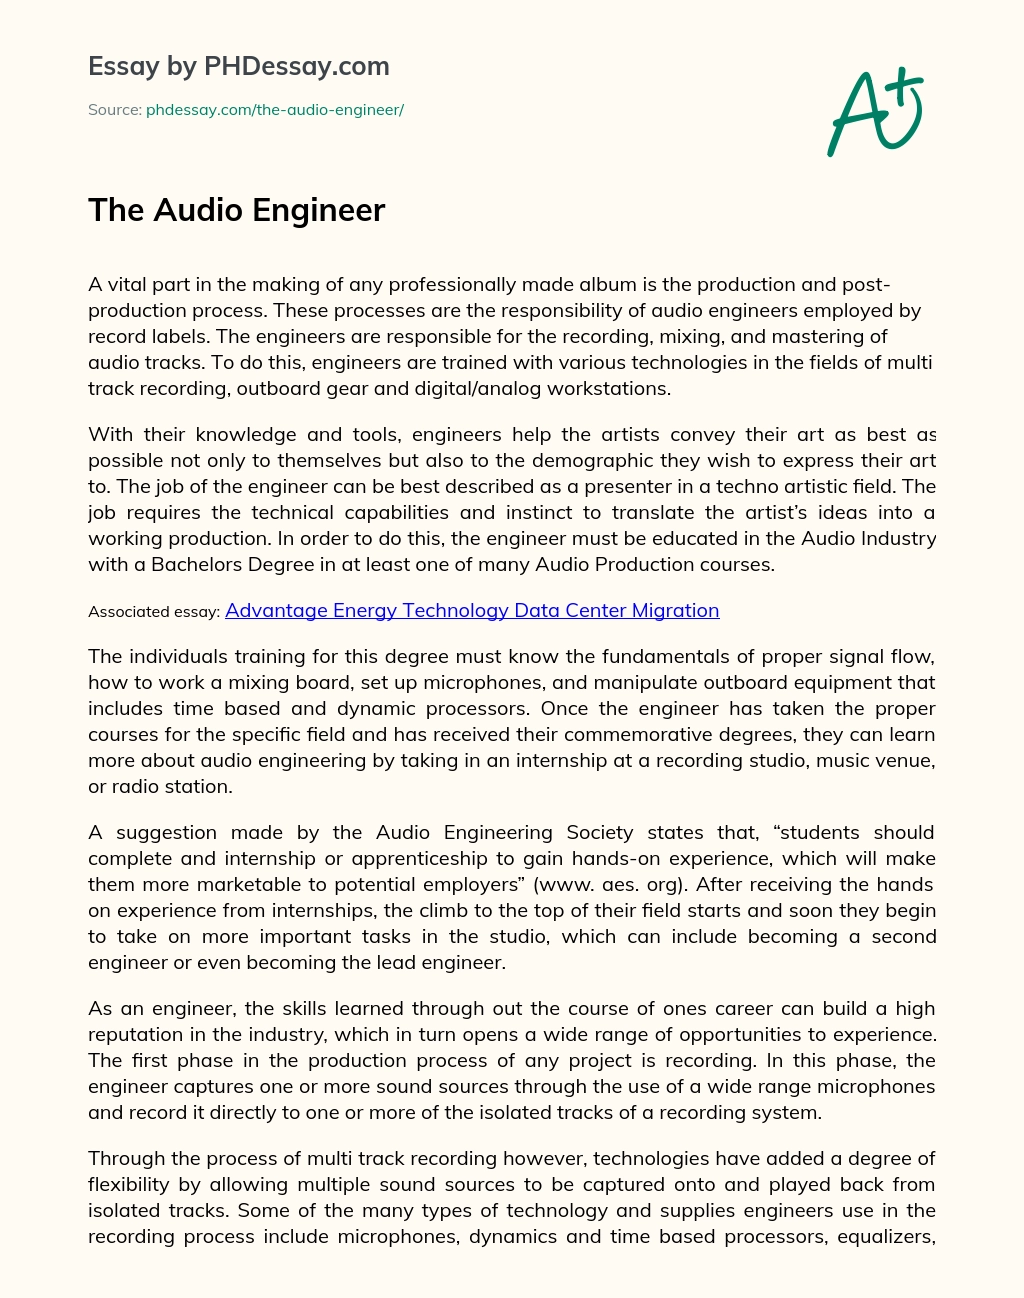 The Audio Engineer essay